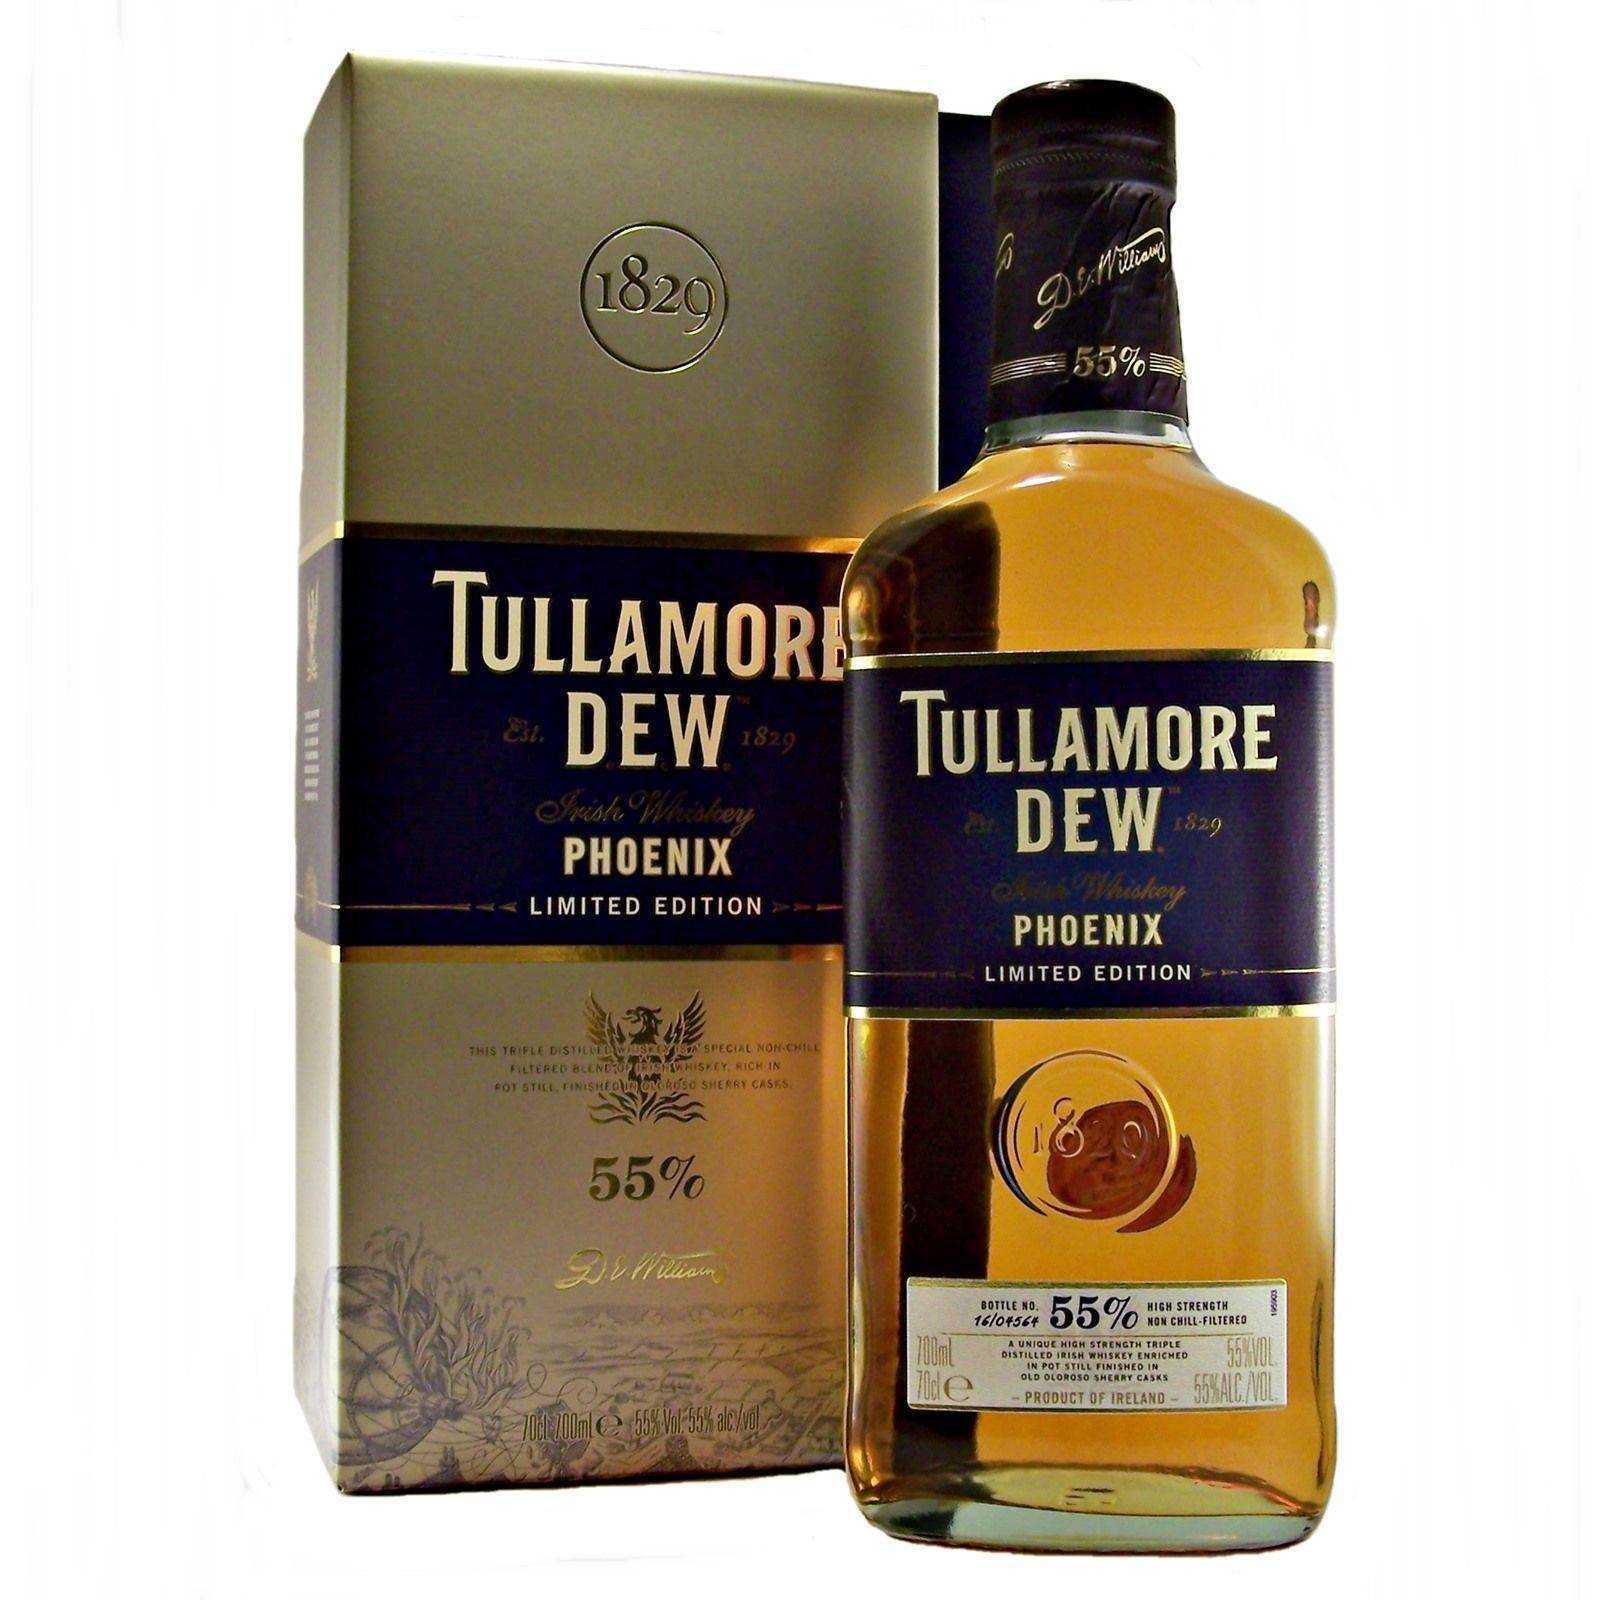 Tullamore dew - ирландский виски, созданный для американцев | мир виски | дзен